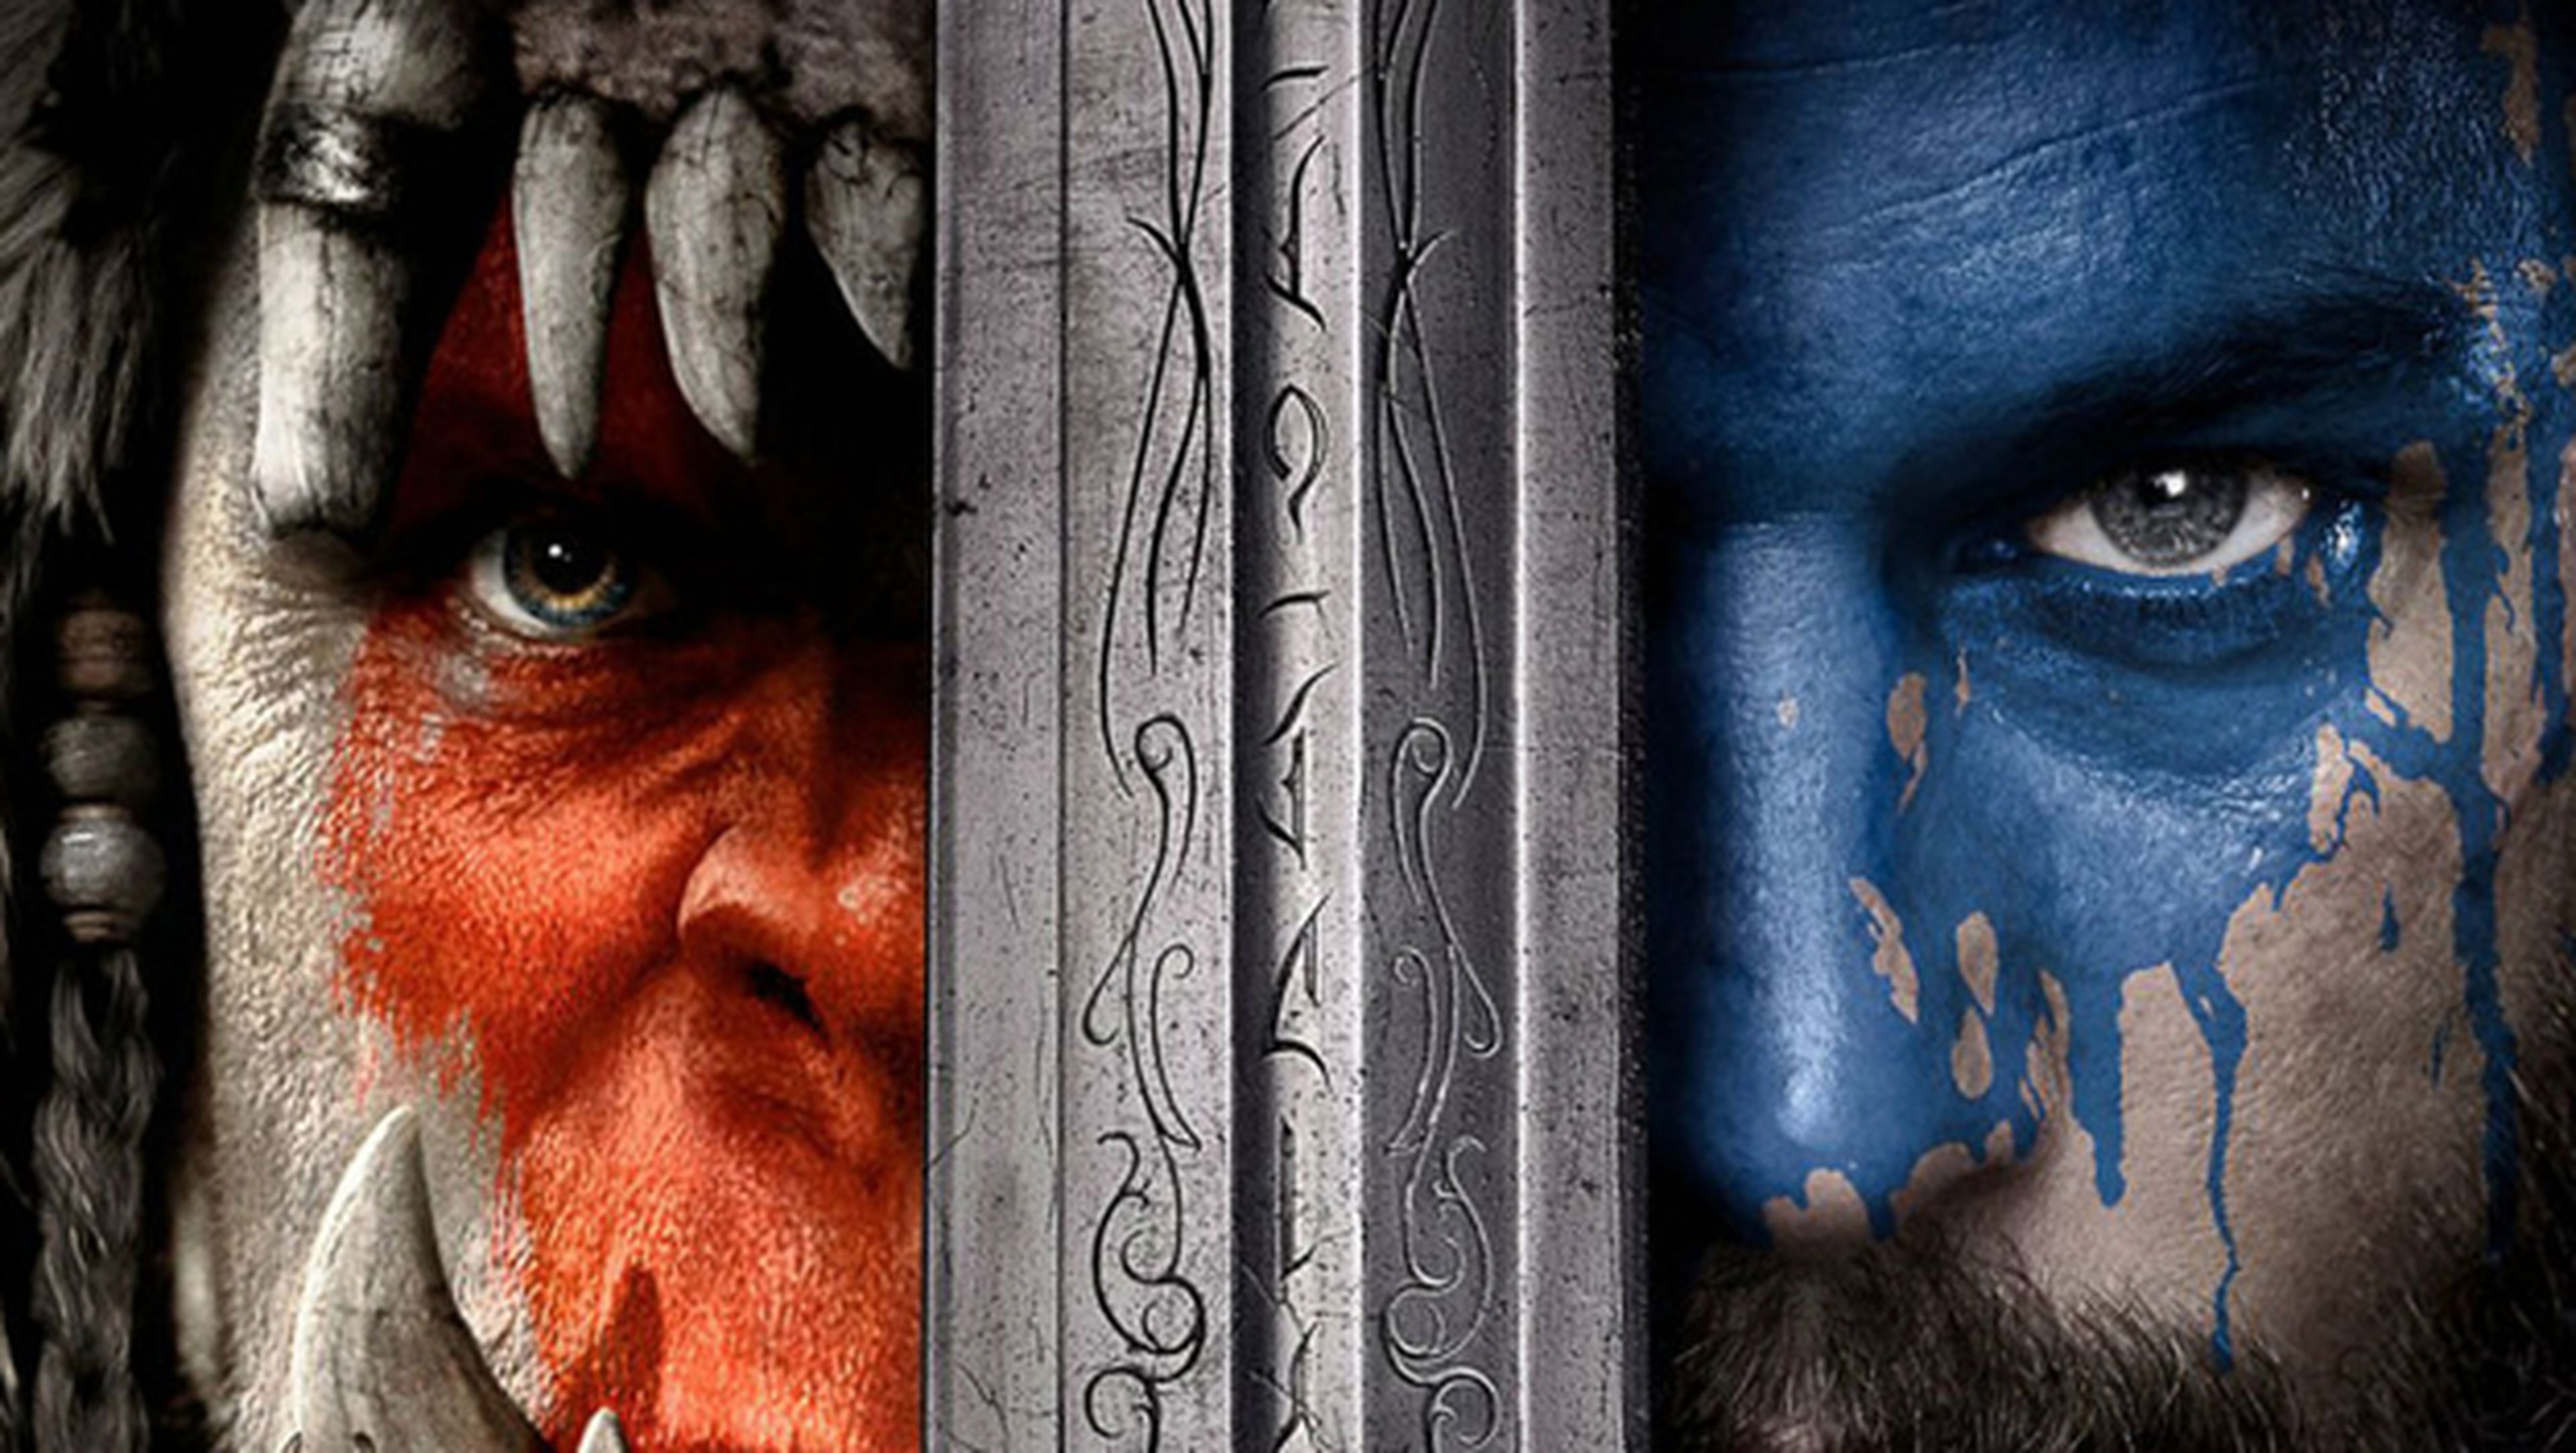 El teaser de Warcraft promete una película épica y masiva